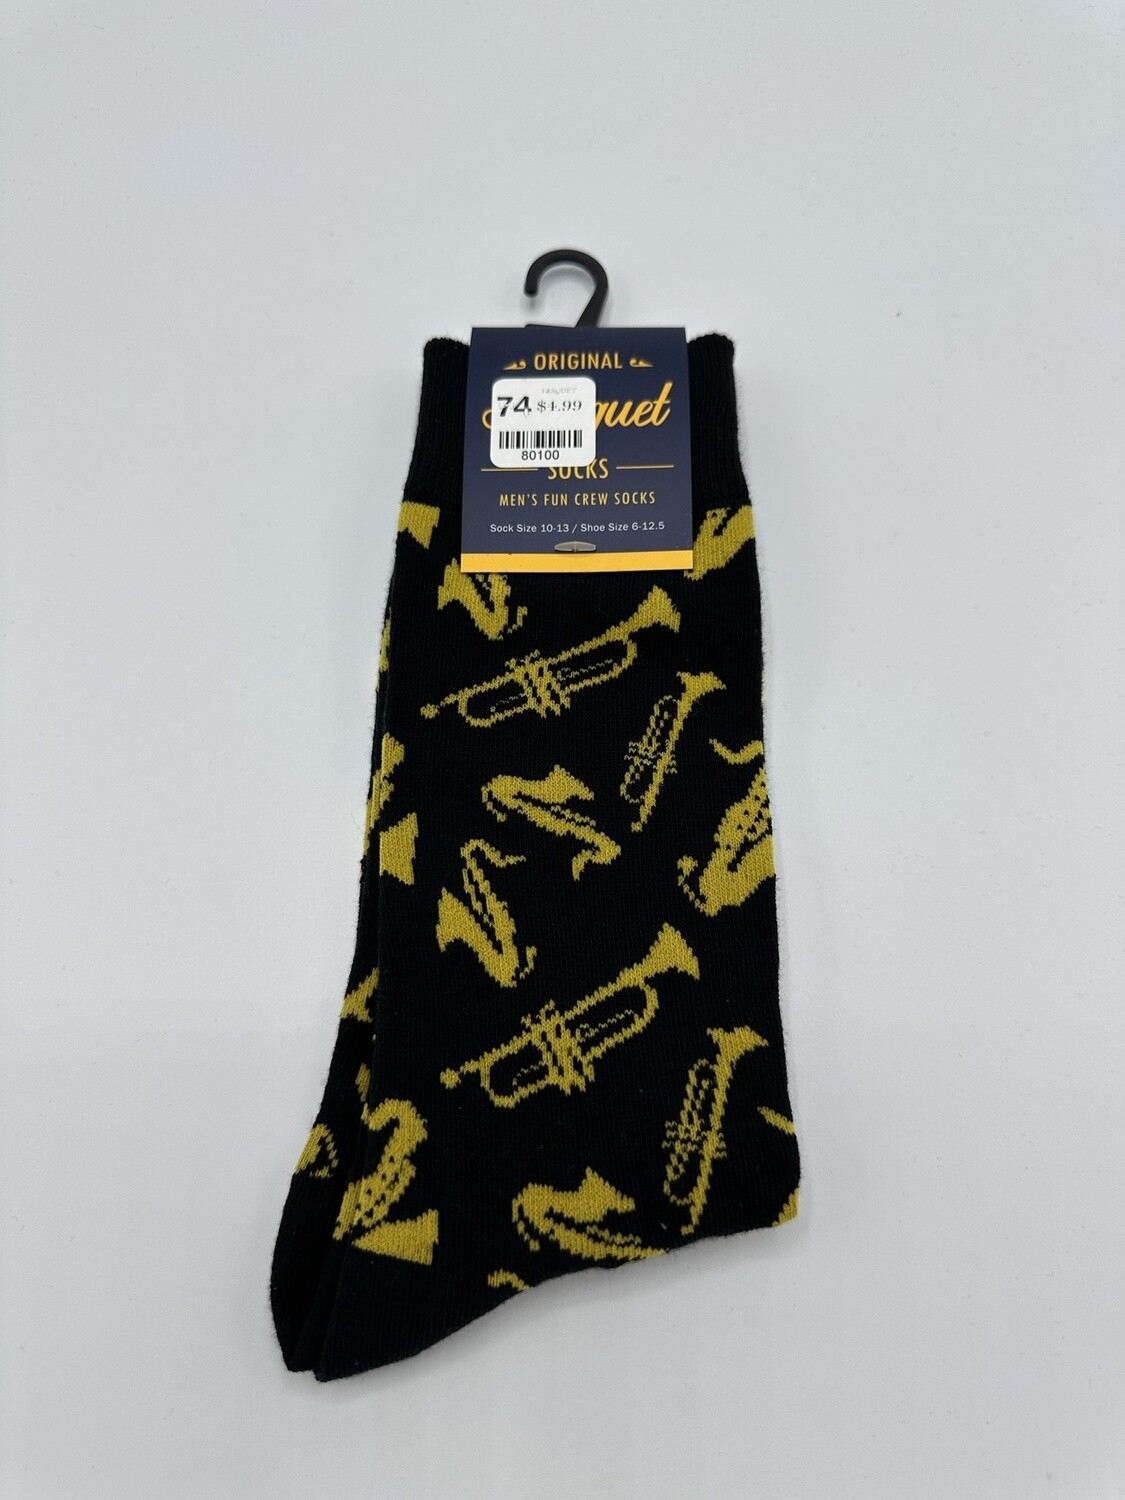 Trumpet - sock size 10-13